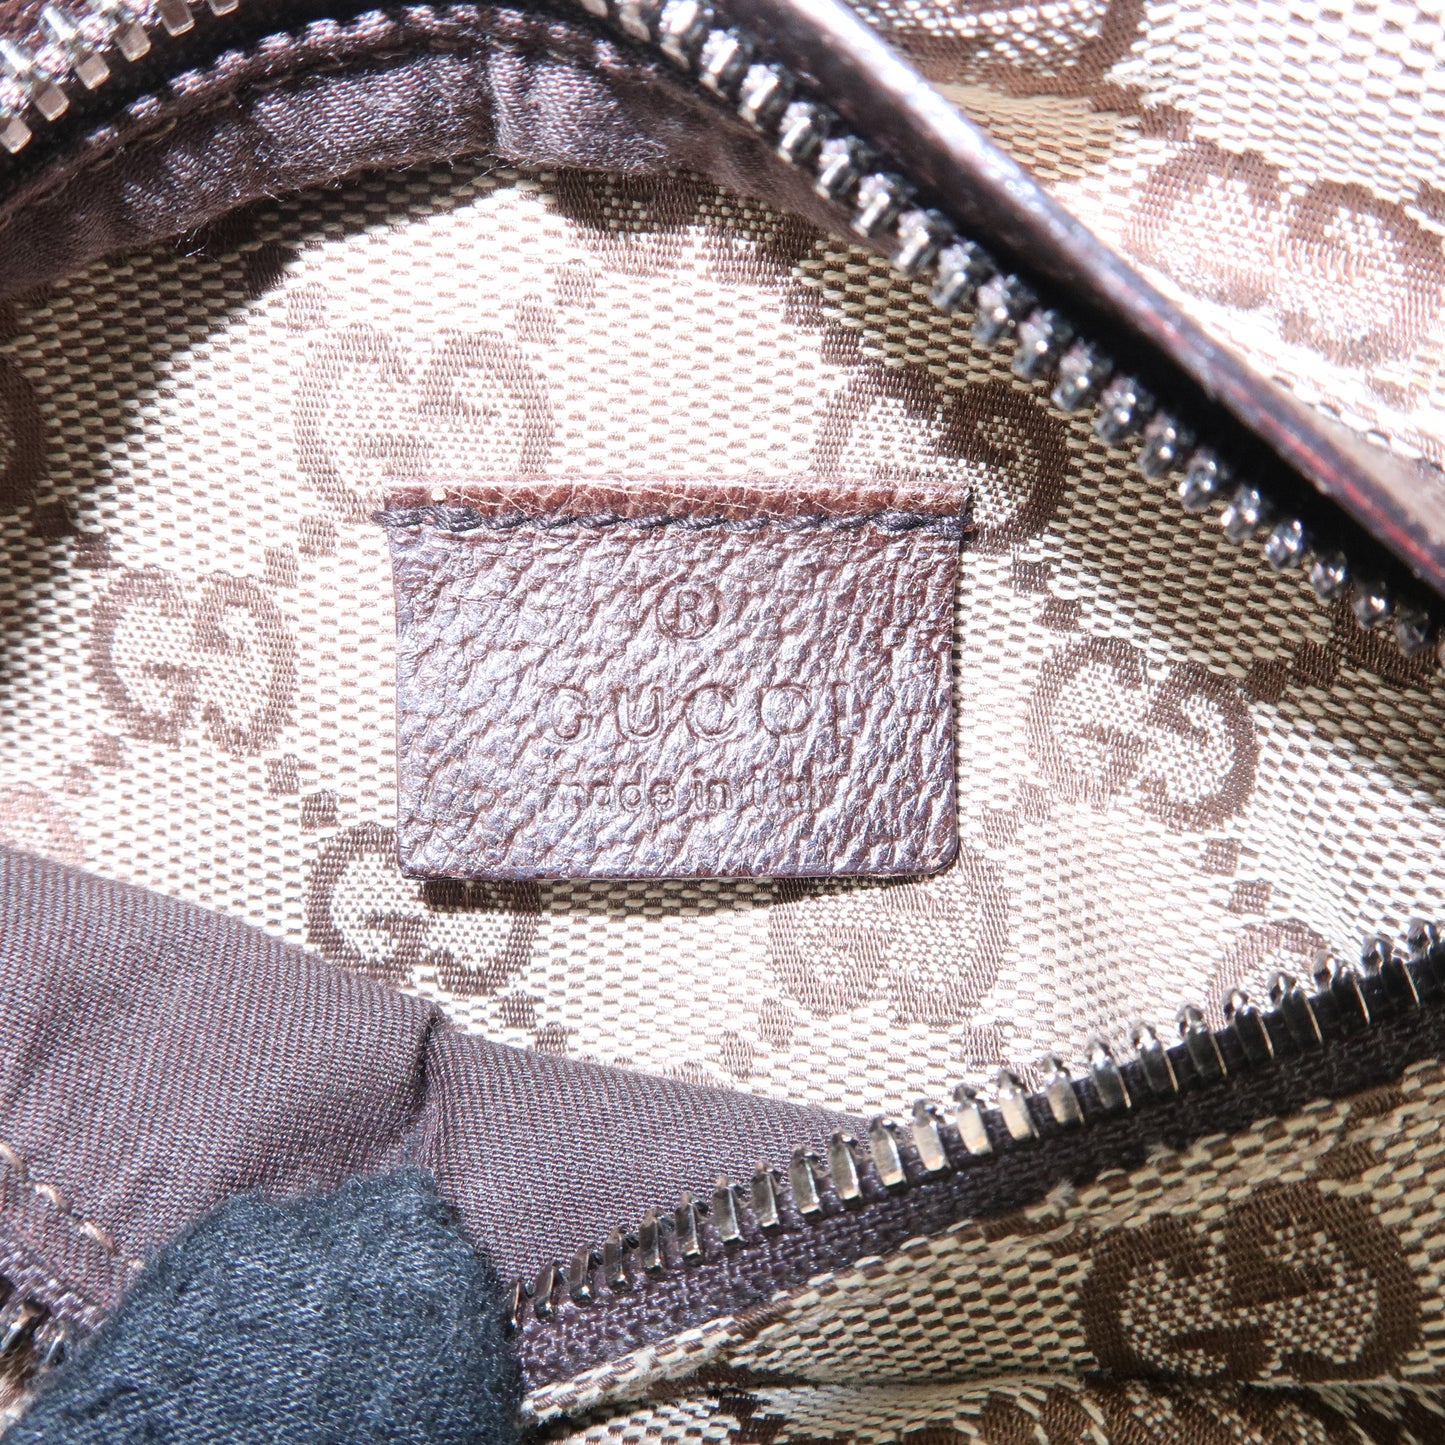 GUCCI GG Canvas Leather Waist Bag Crossbody Bag Beige Brown 28566